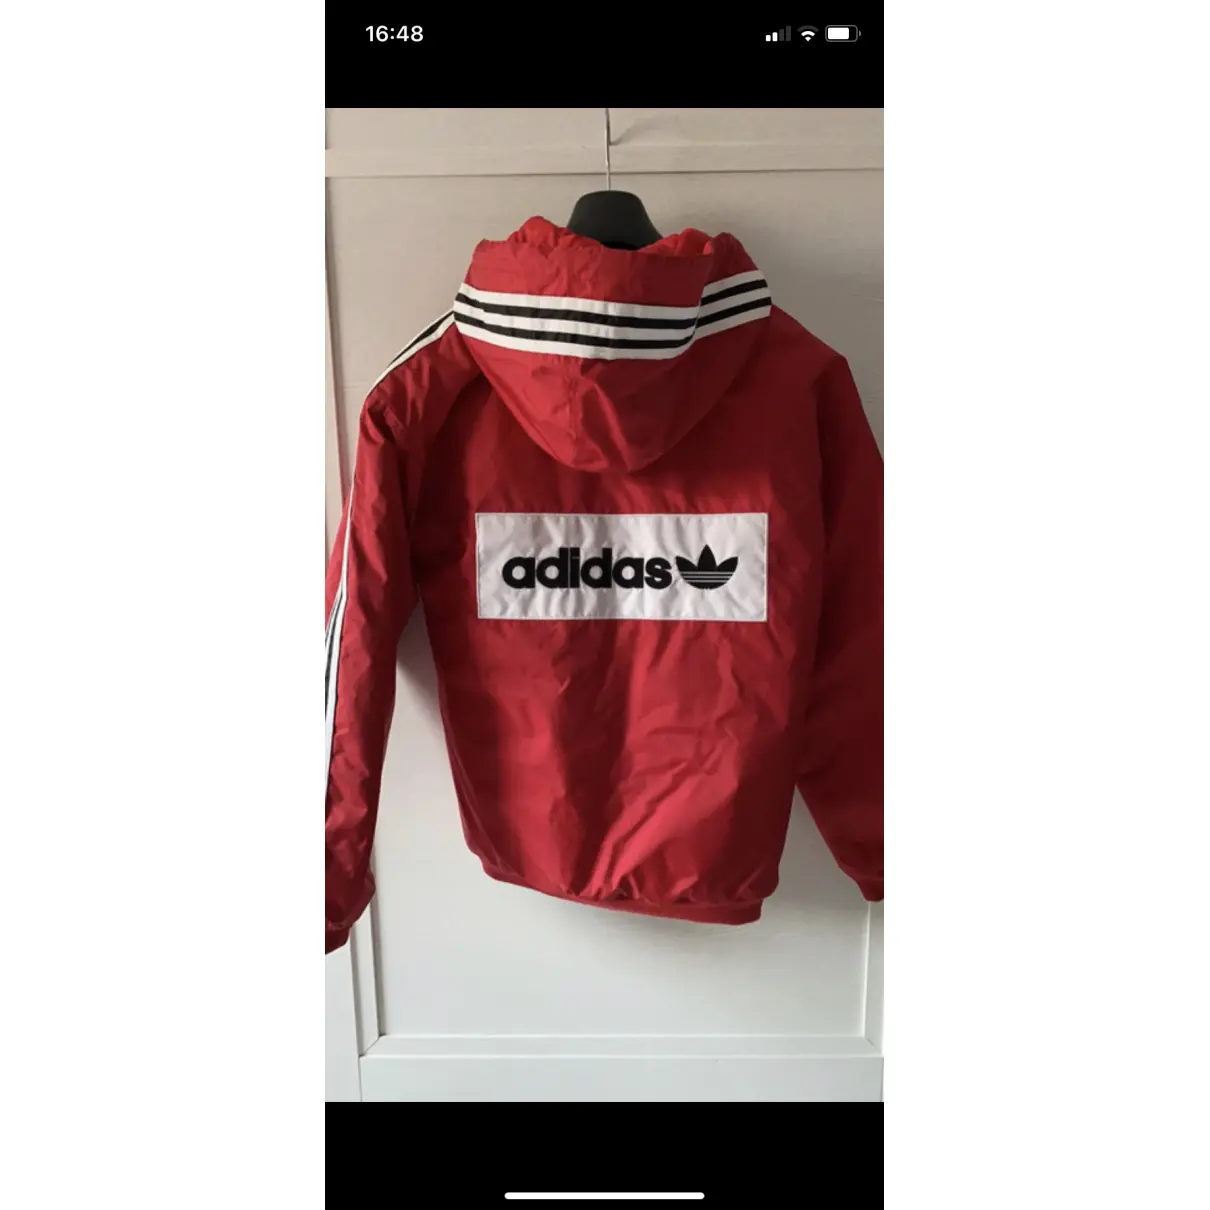 Buy Adidas Jacket online